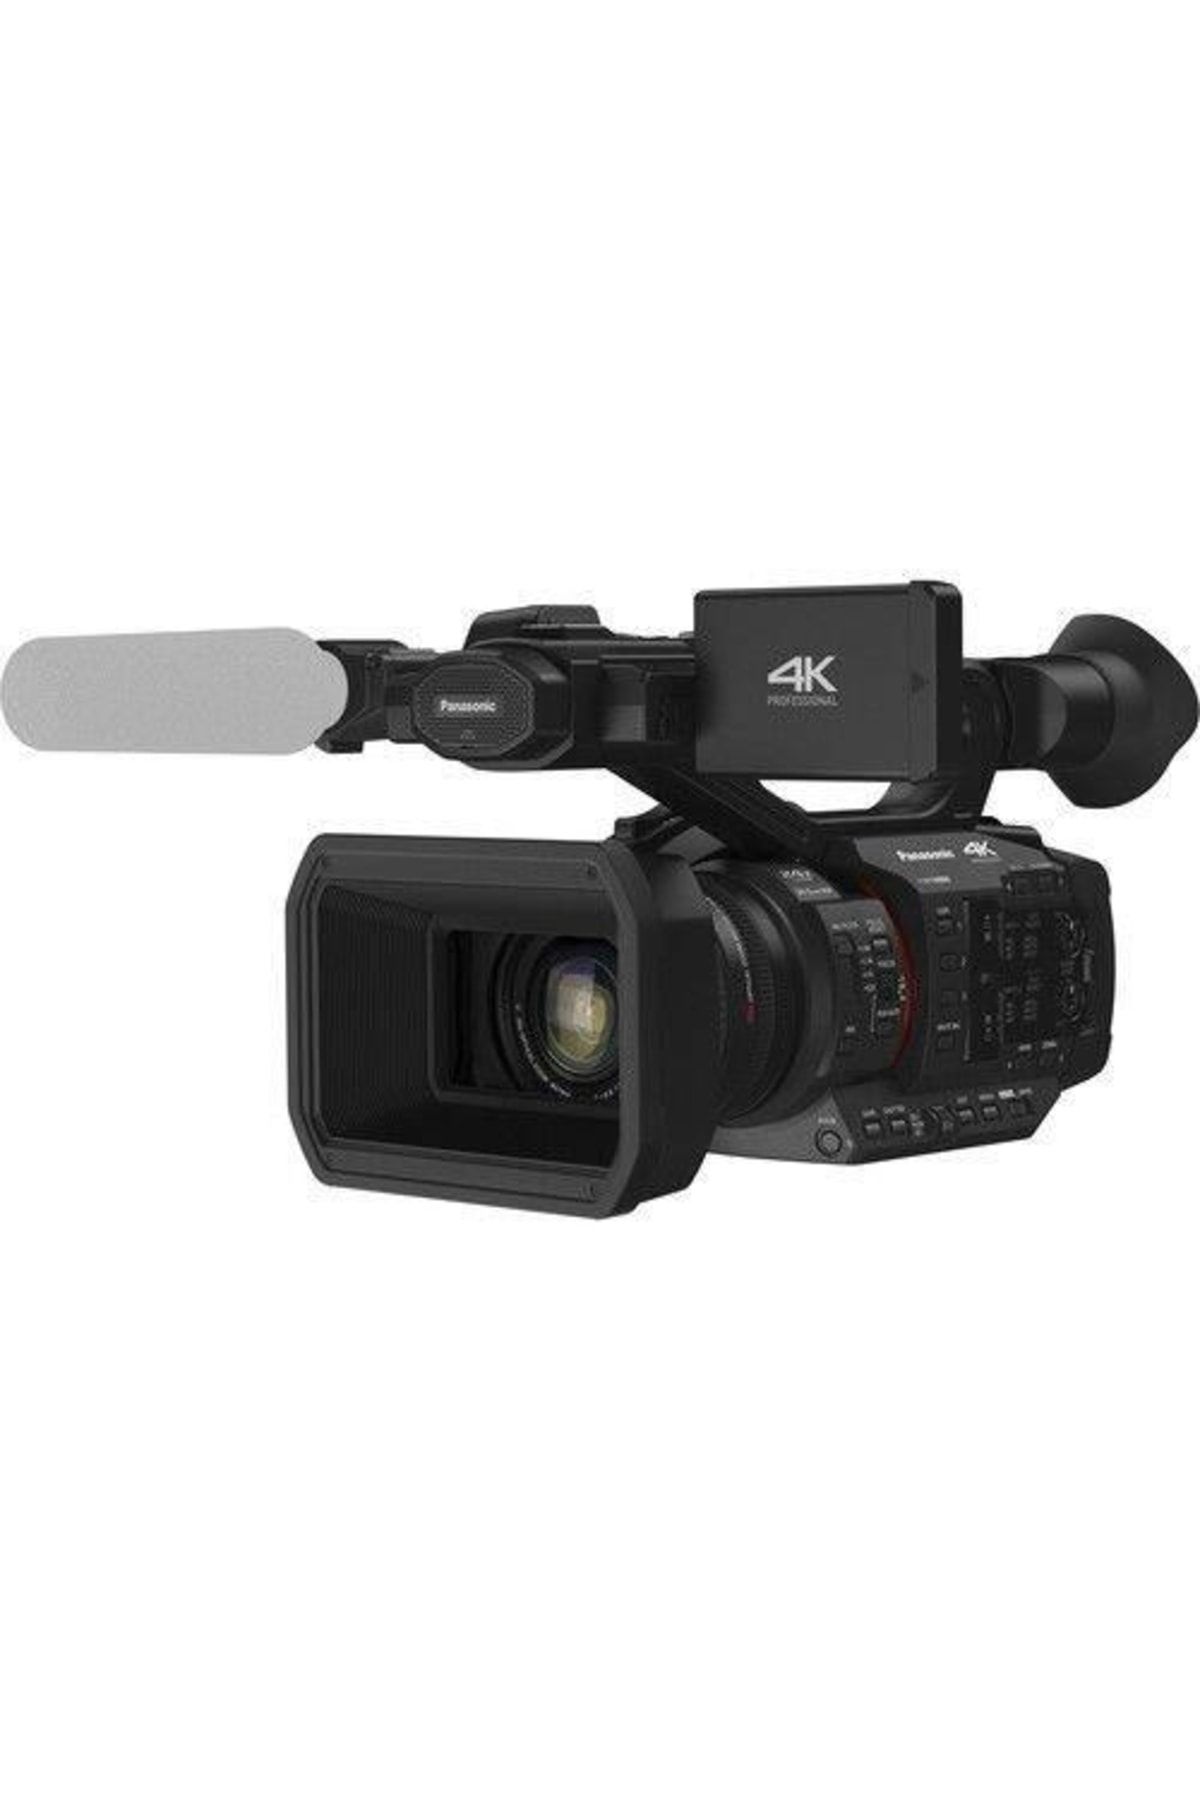 Panasonic Hc-x20 4k Mobil Video Kamera